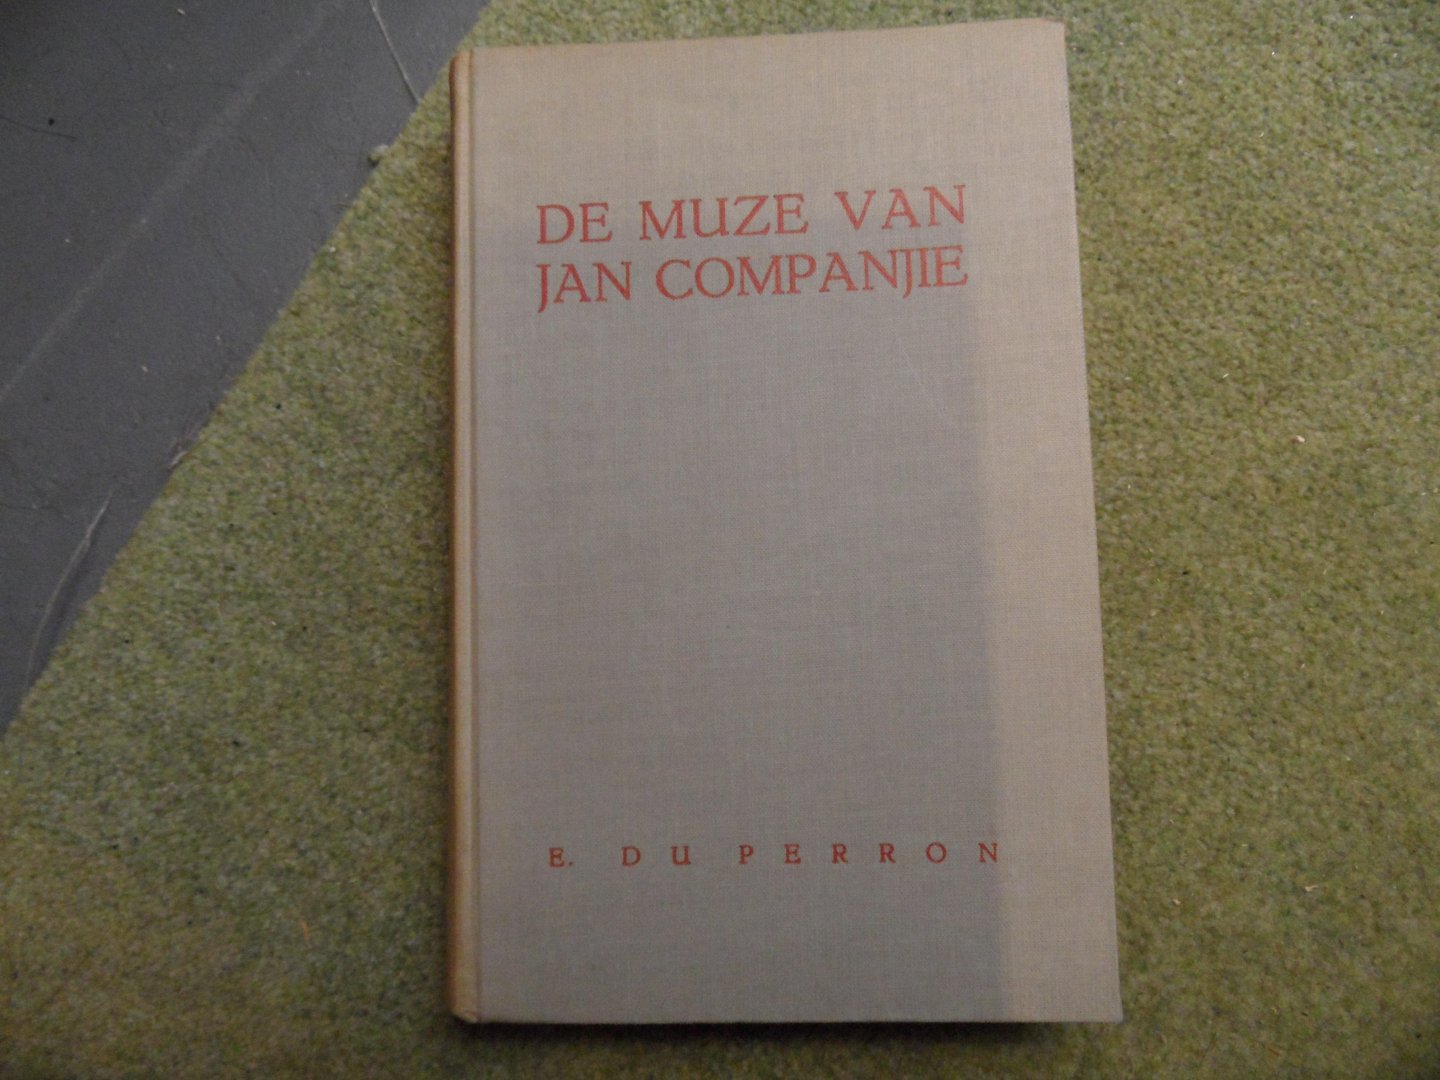 Perron, E. du - De Muze van Jan Companjie